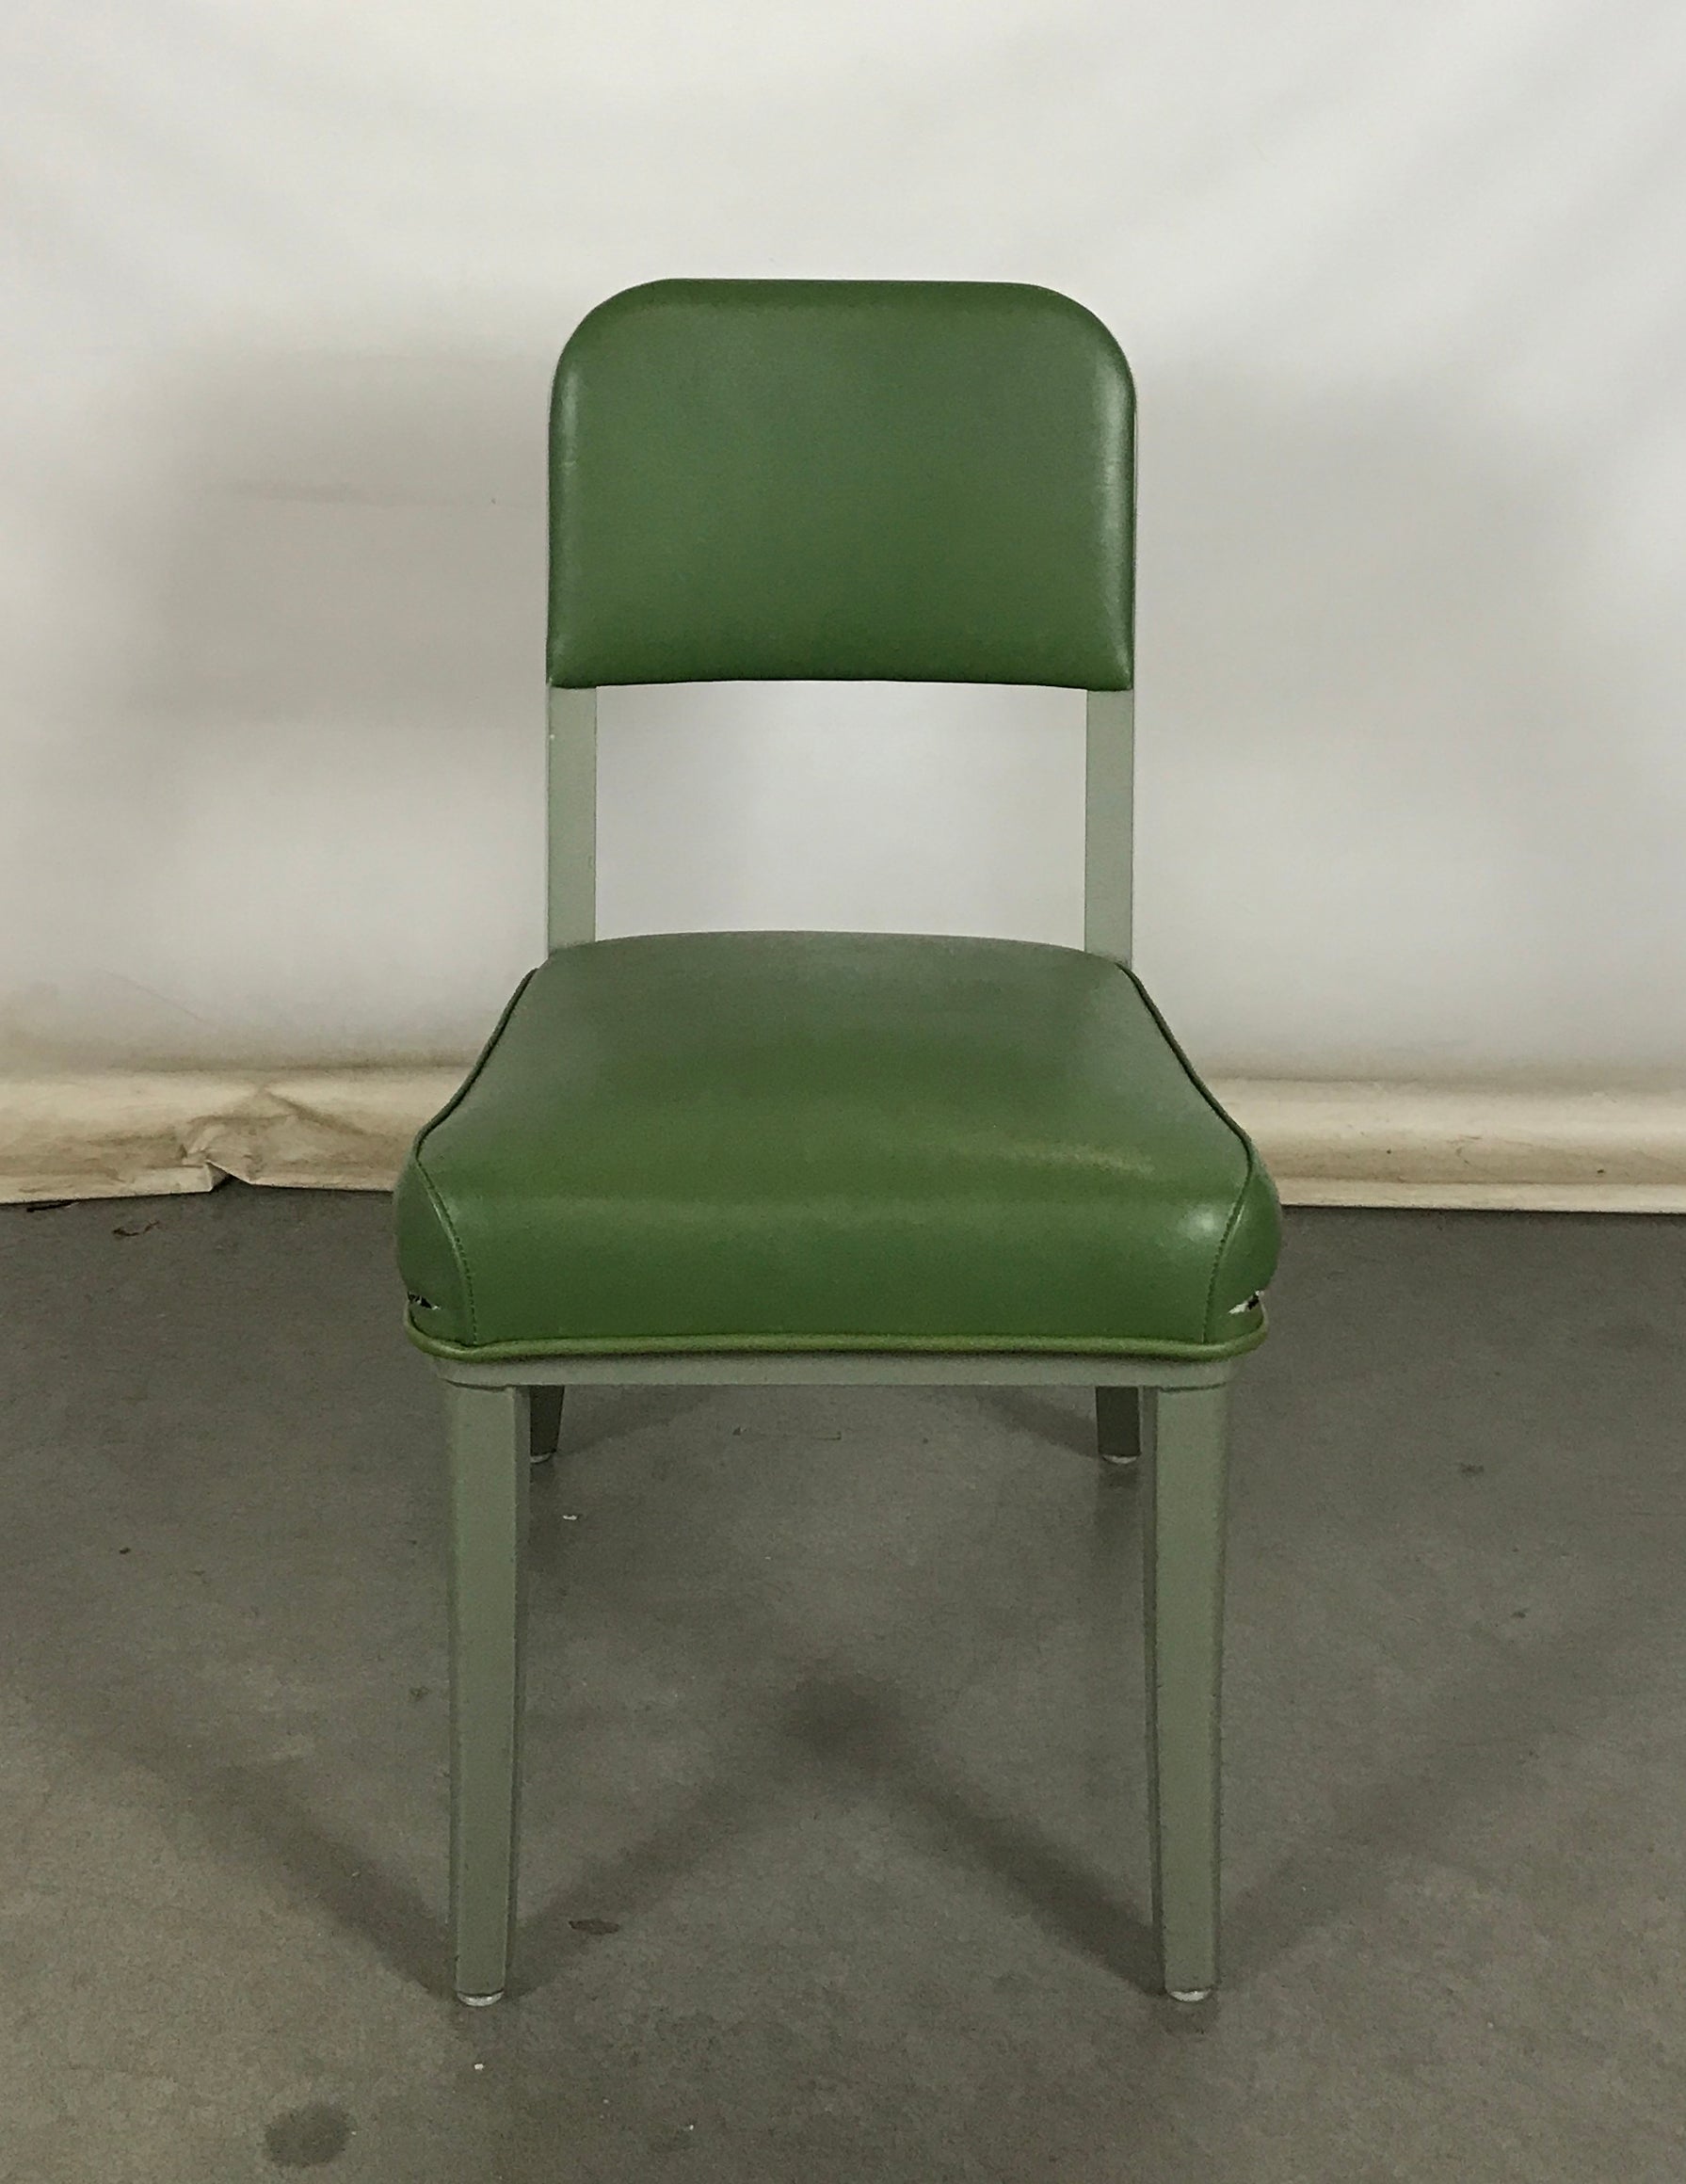 Green Steelcase Chair